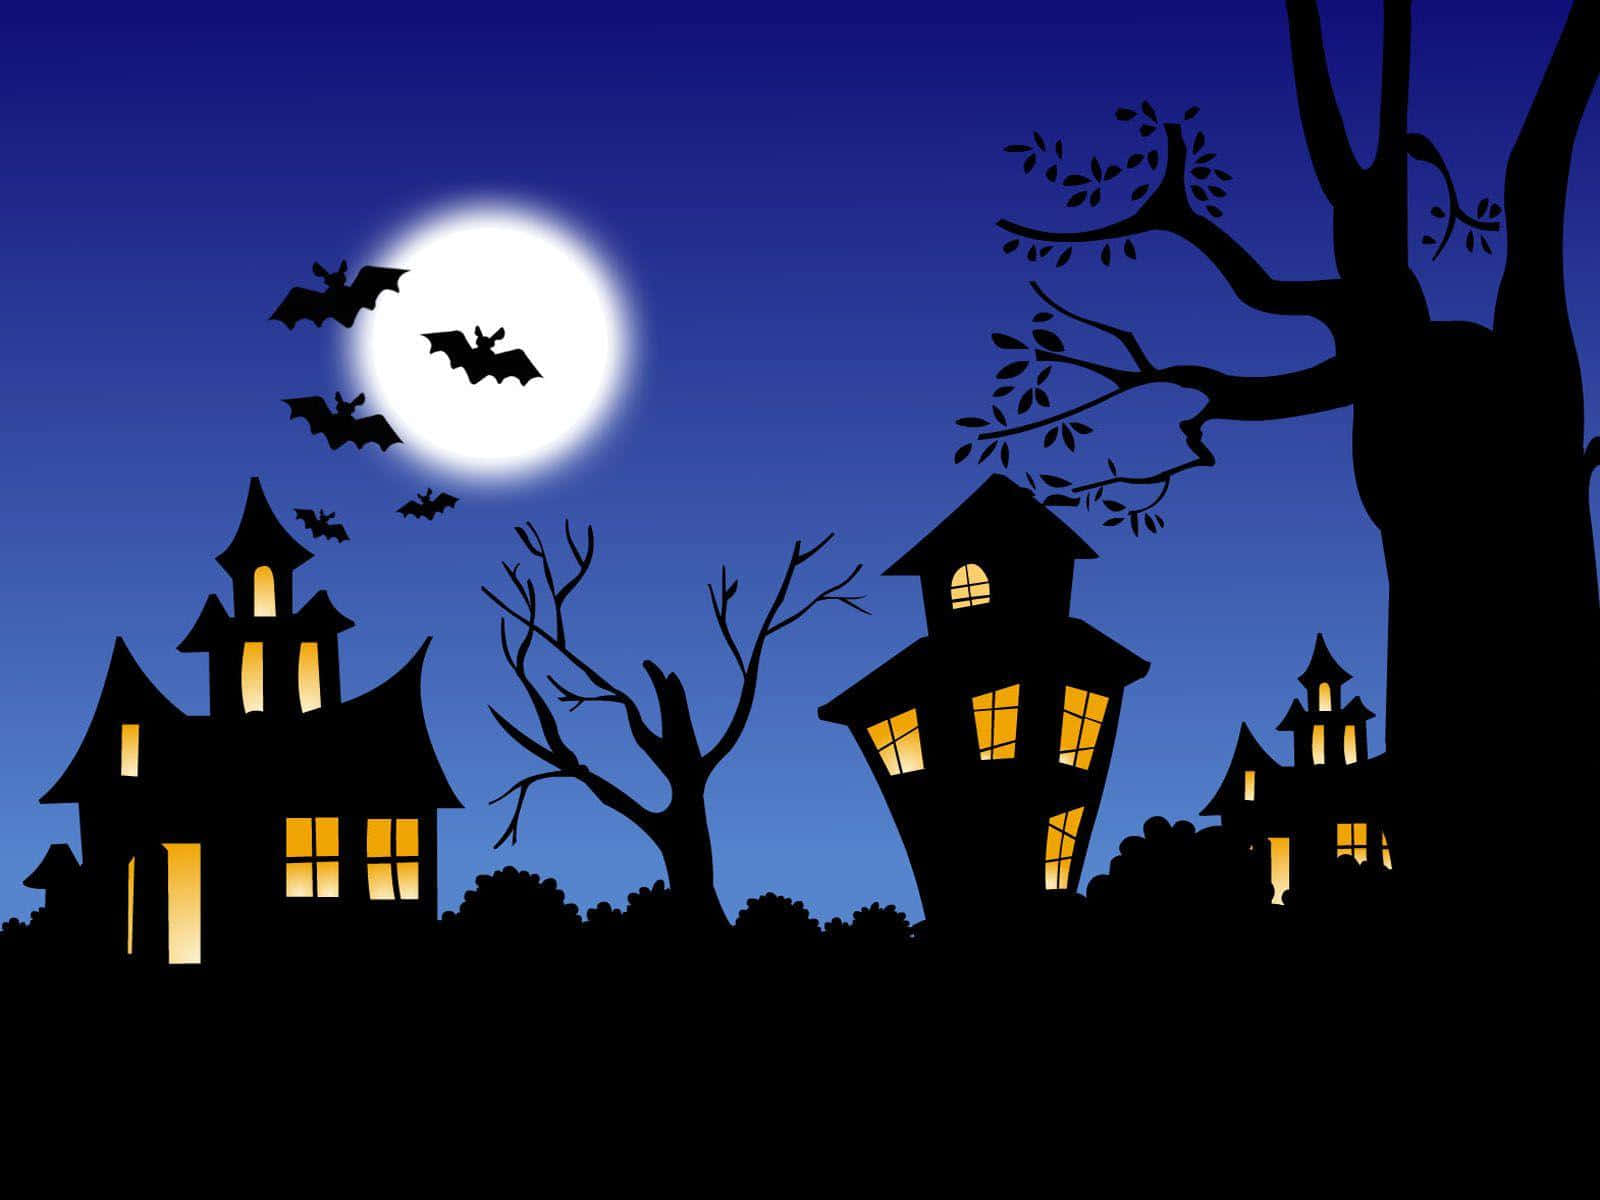 halloween haunted house cartoon